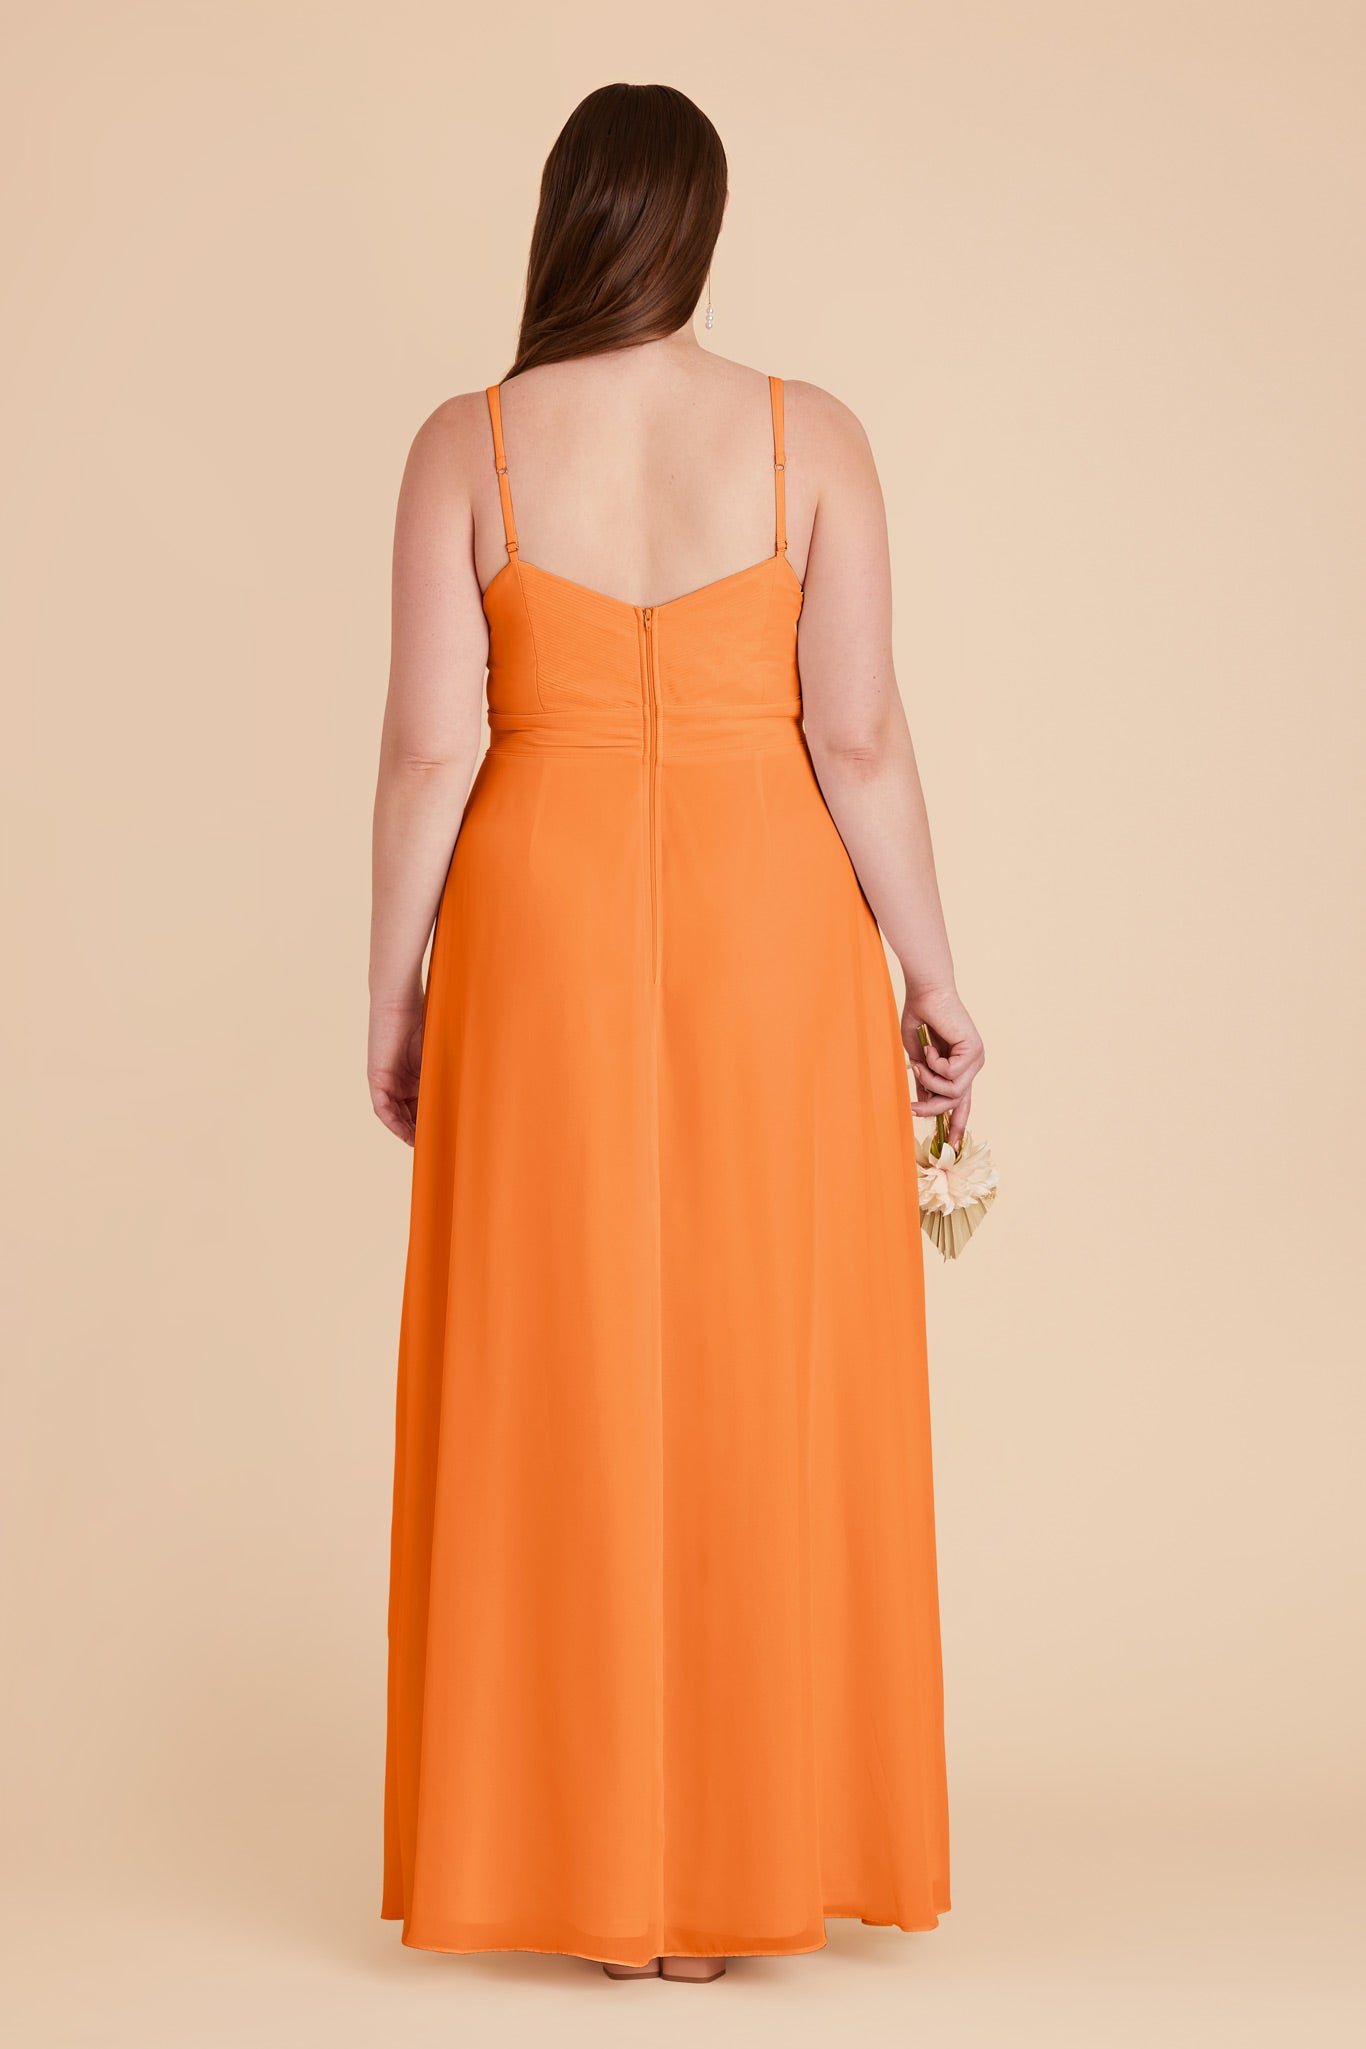 Apricot Deborah Chiffon Dress by Birdy Grey